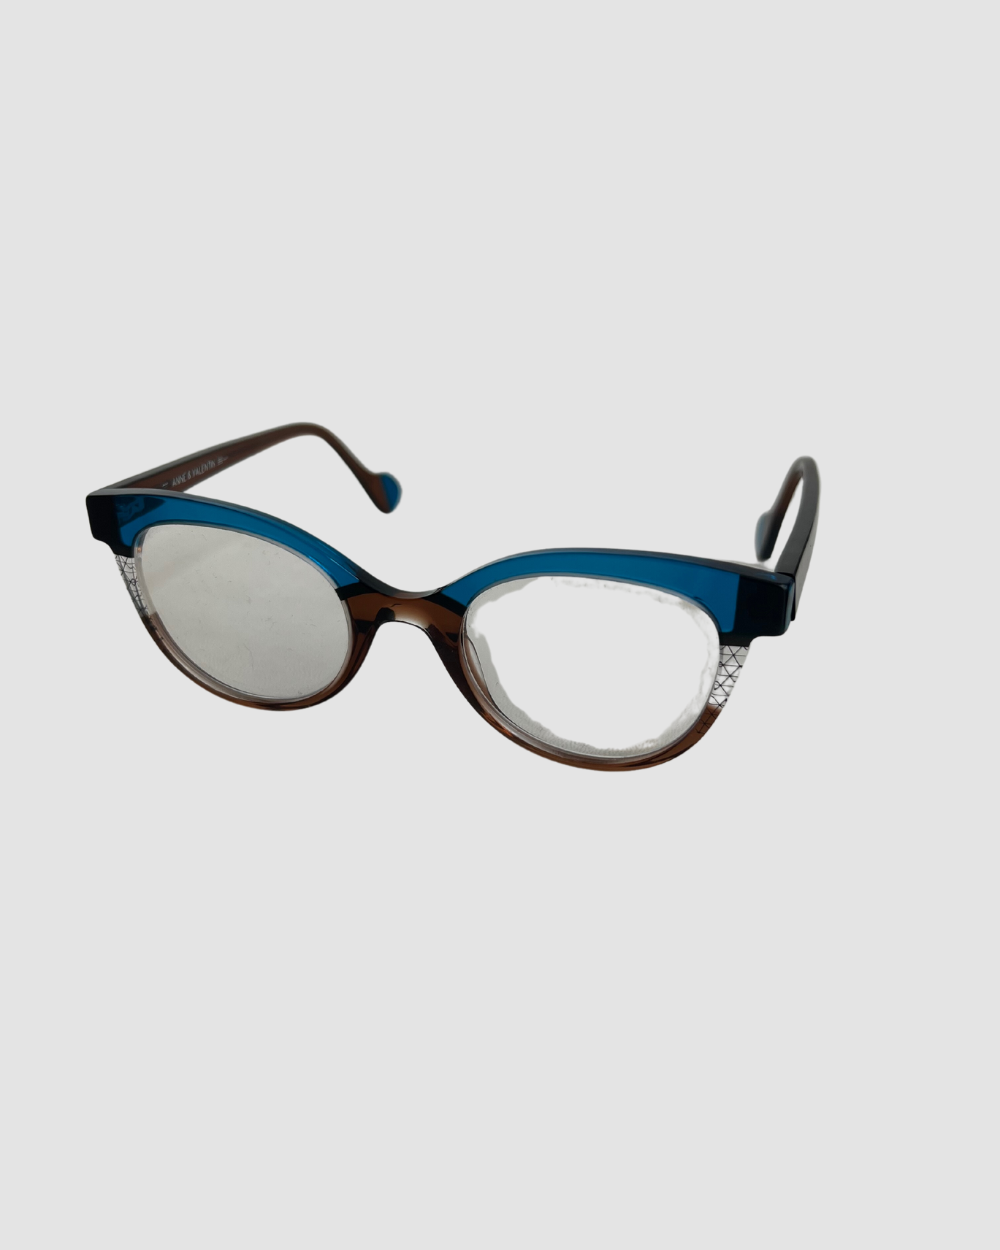 Anne & Valentin Blue/Brown Reader Glasses